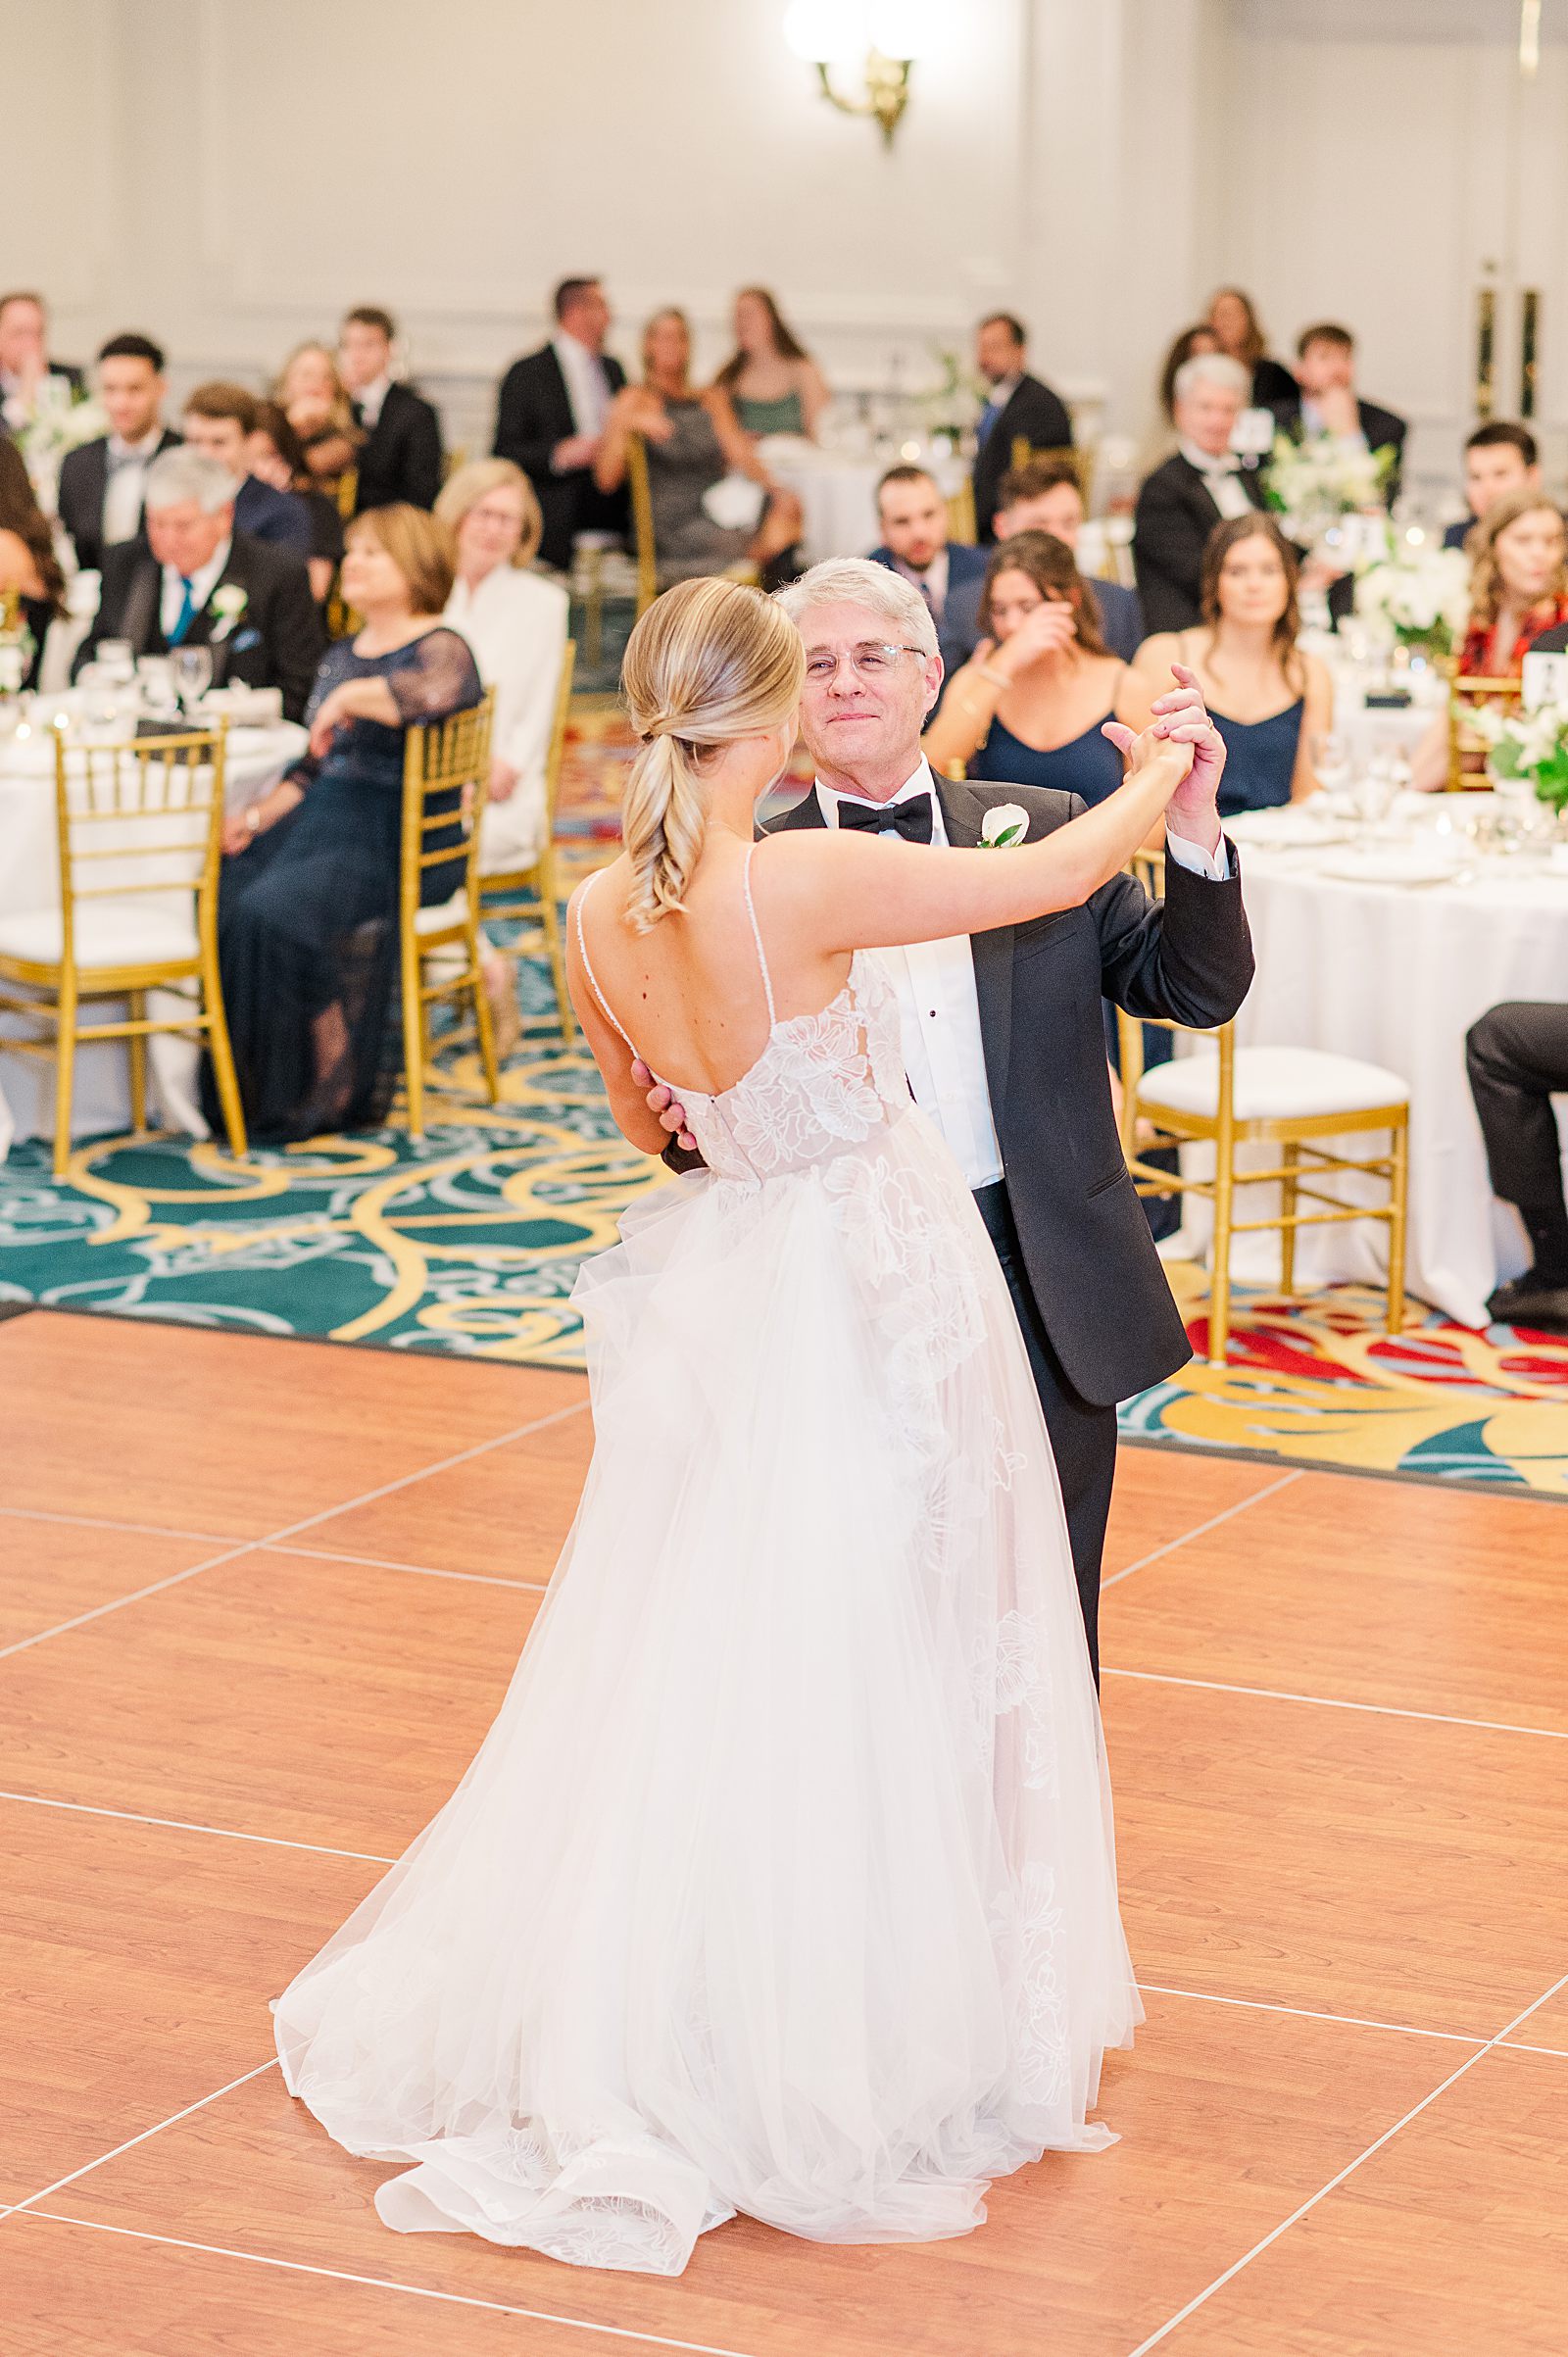 Dances During Reception at Jefferson Hotel Wedding. Richmond Wedding Photographer Kailey Brianne Photography